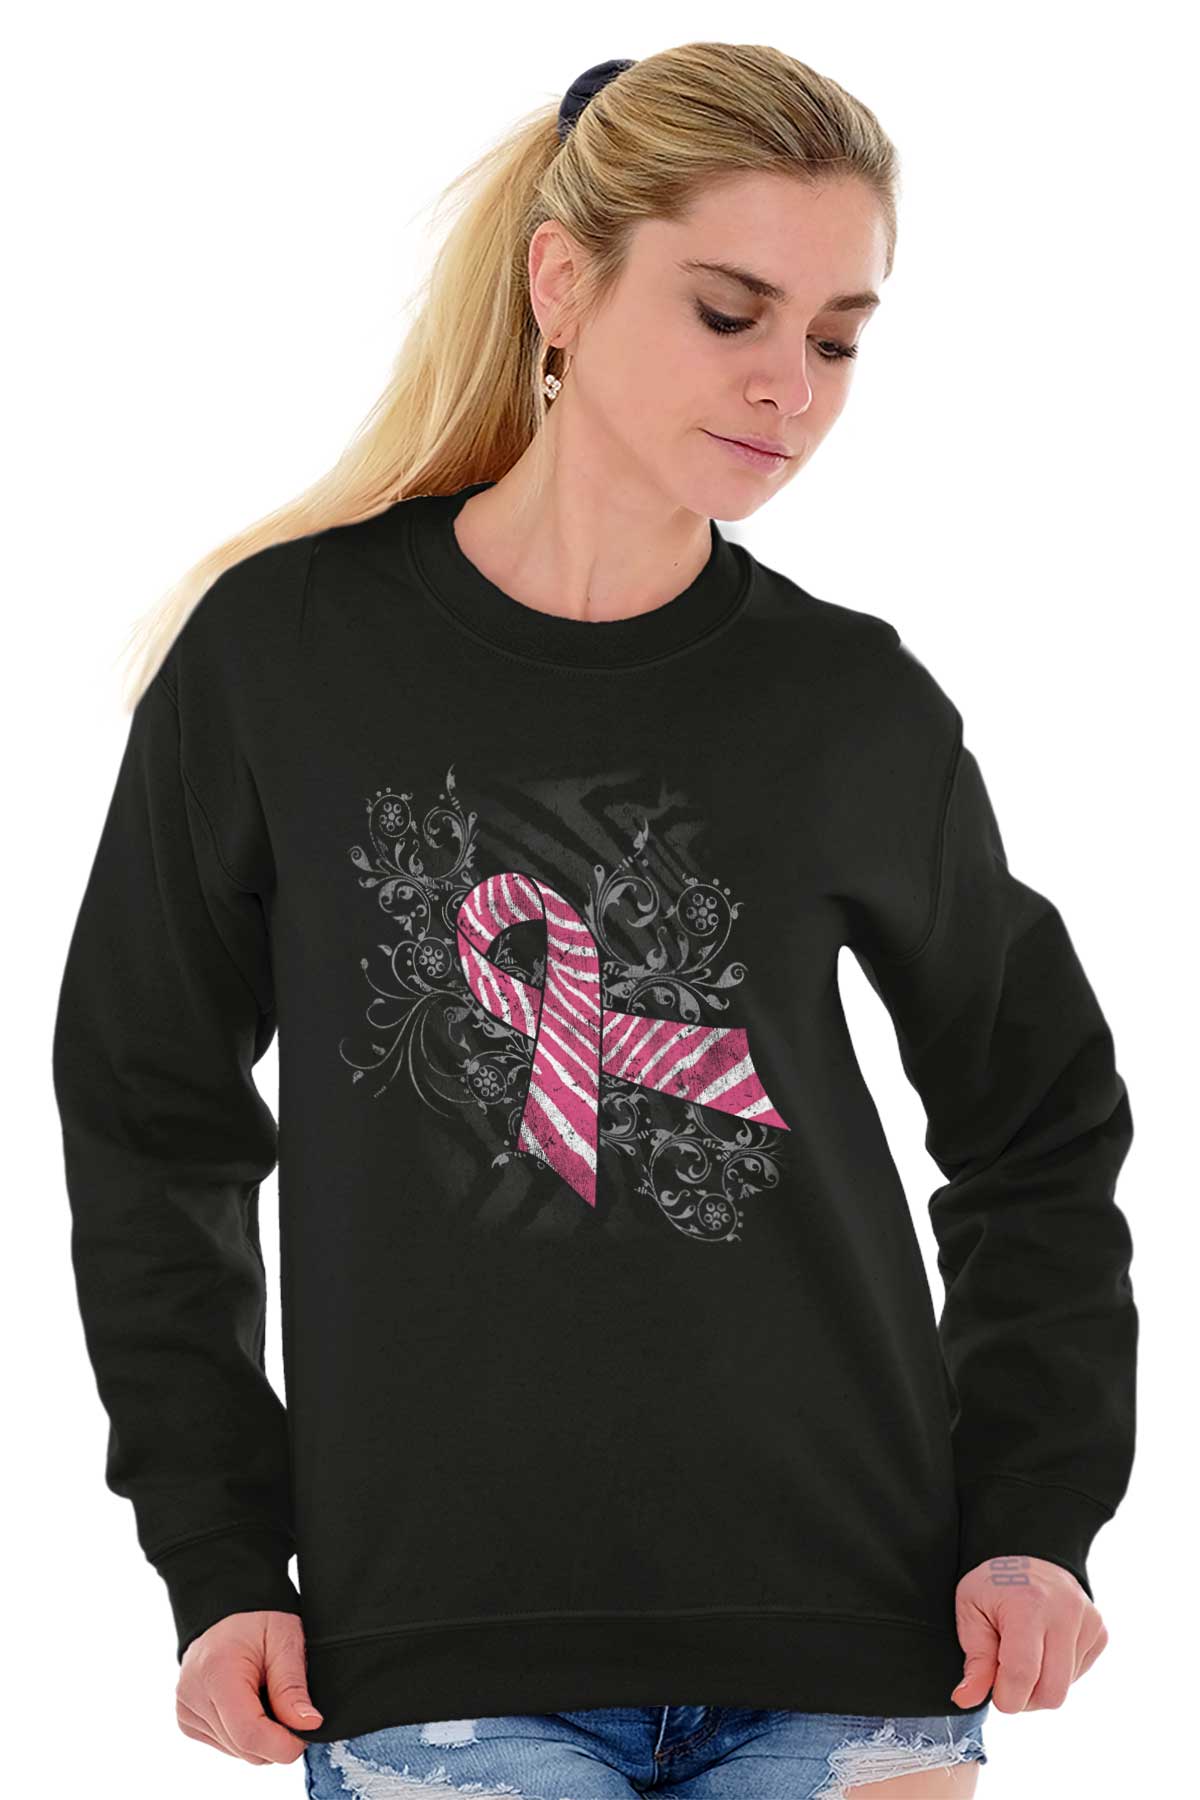 Christian Strong Women's Pink White Ribbon Crewneck Sweatshirt Fight Cancer Faith, Black / 4X Large